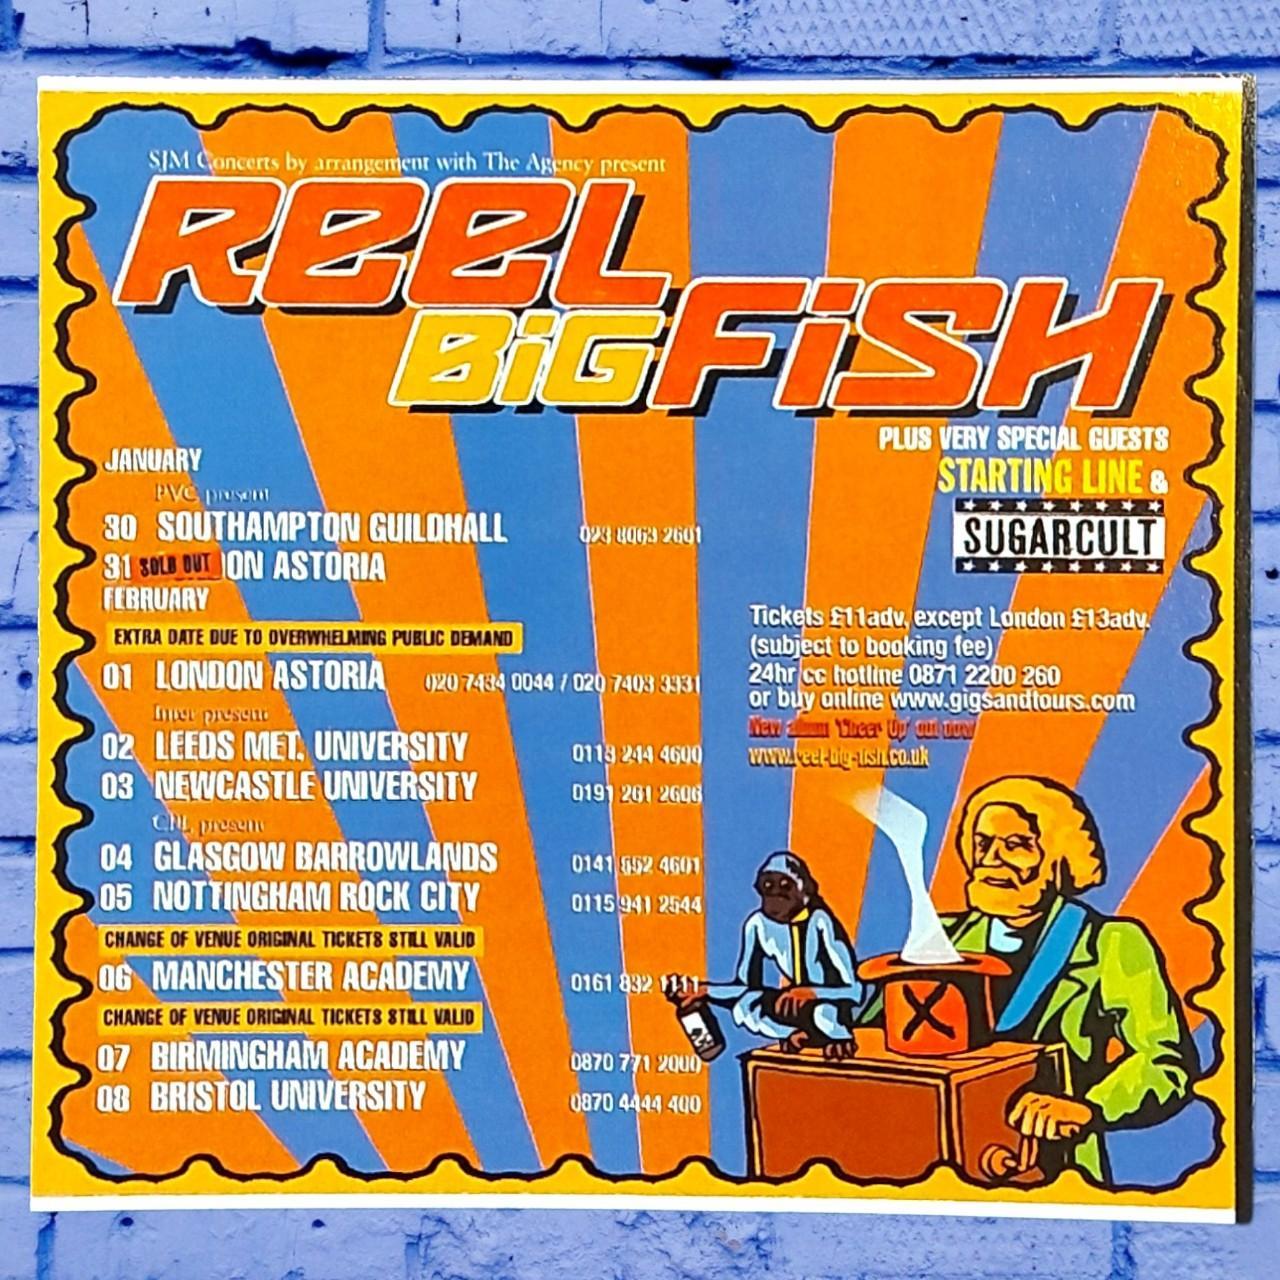 Reel big fish tour advert from 2003 Mini add from - Depop